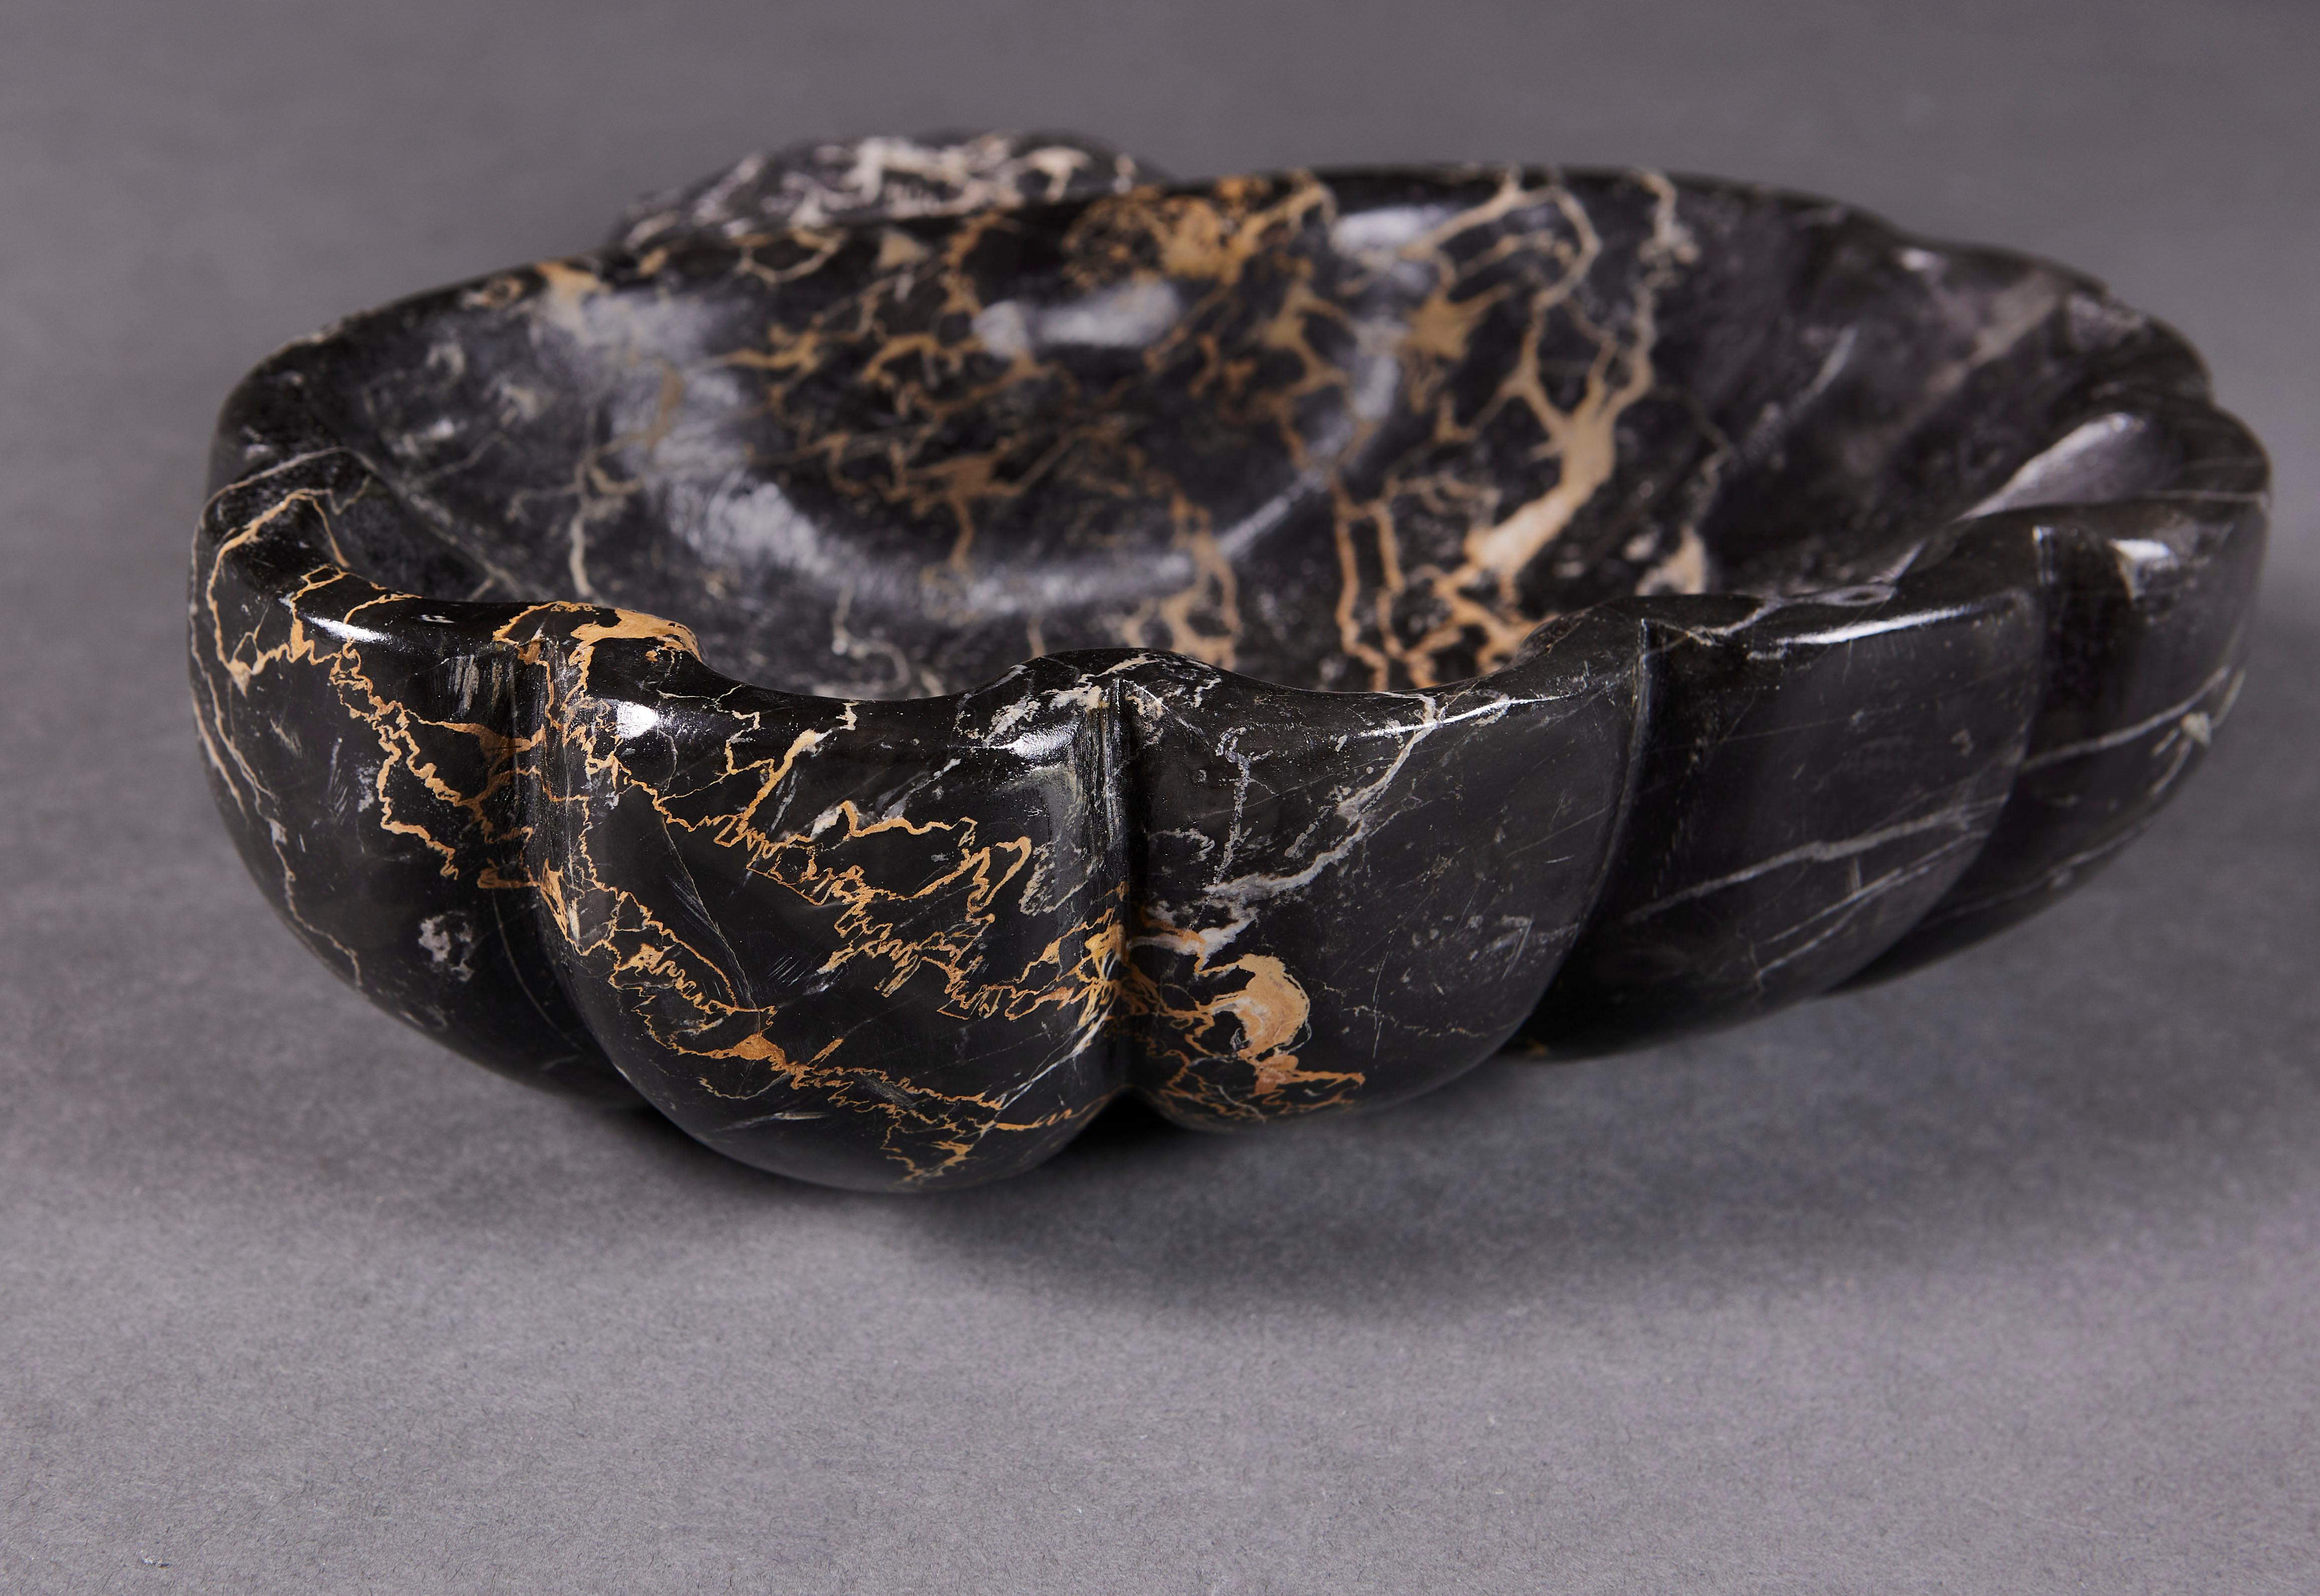 18th Century A Pair of Black Potoro Marble Basins